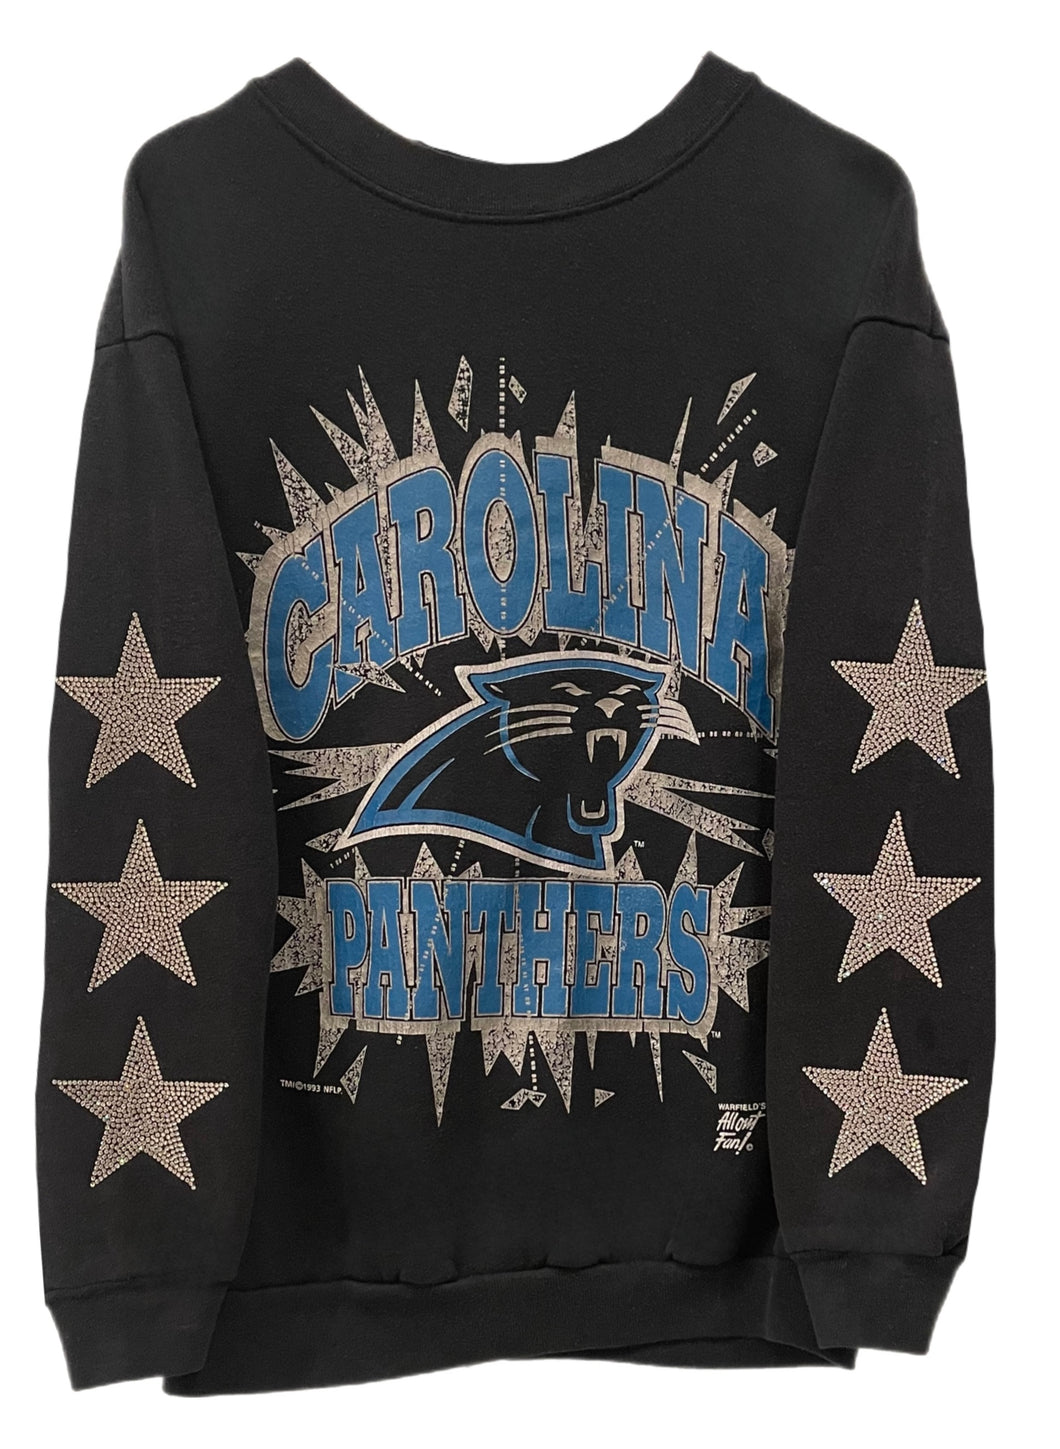 Carolina Panthers, NFL One of a KIND Vintage NFL Sweatshirt with Three Crystal Star Design